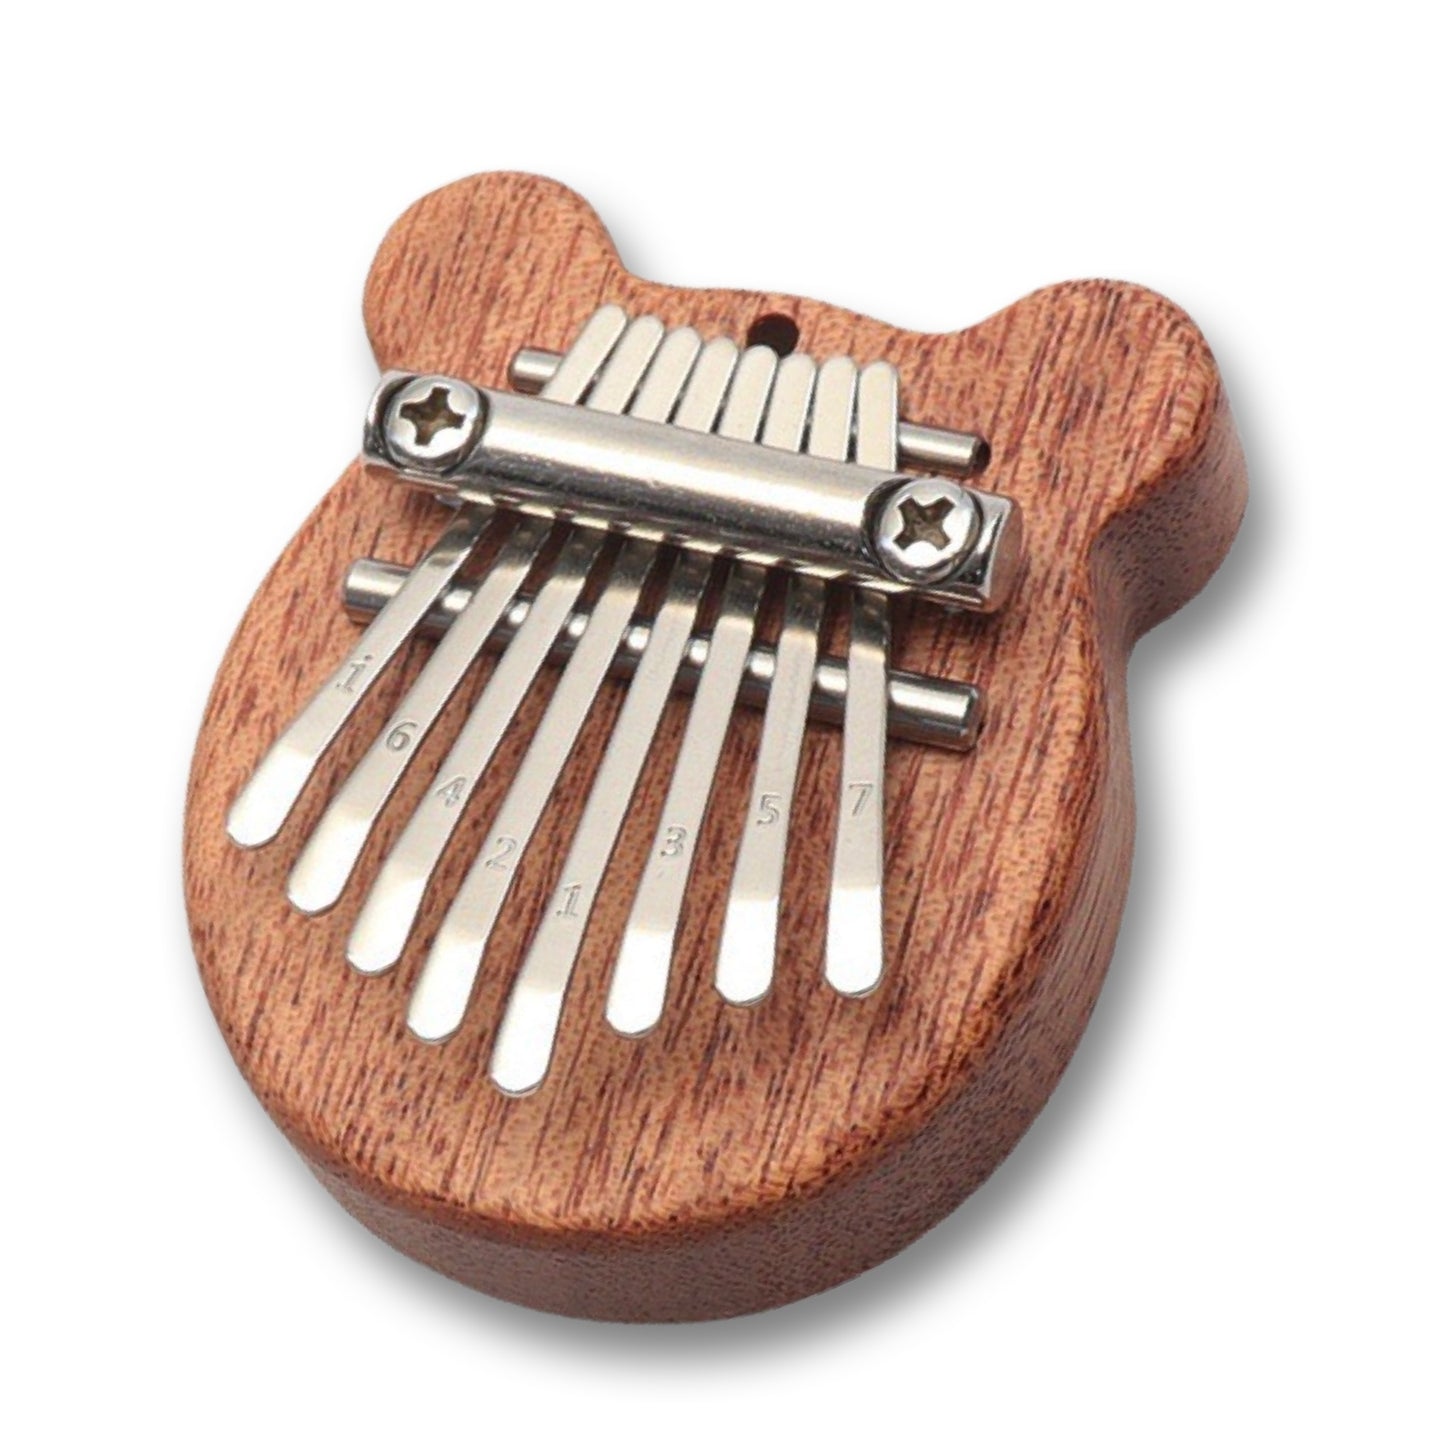 Mini Kalimba 8 Keys Wood Acrylic | Small Thumb Piano for Kids and Beginners | Portable and Easy to Play